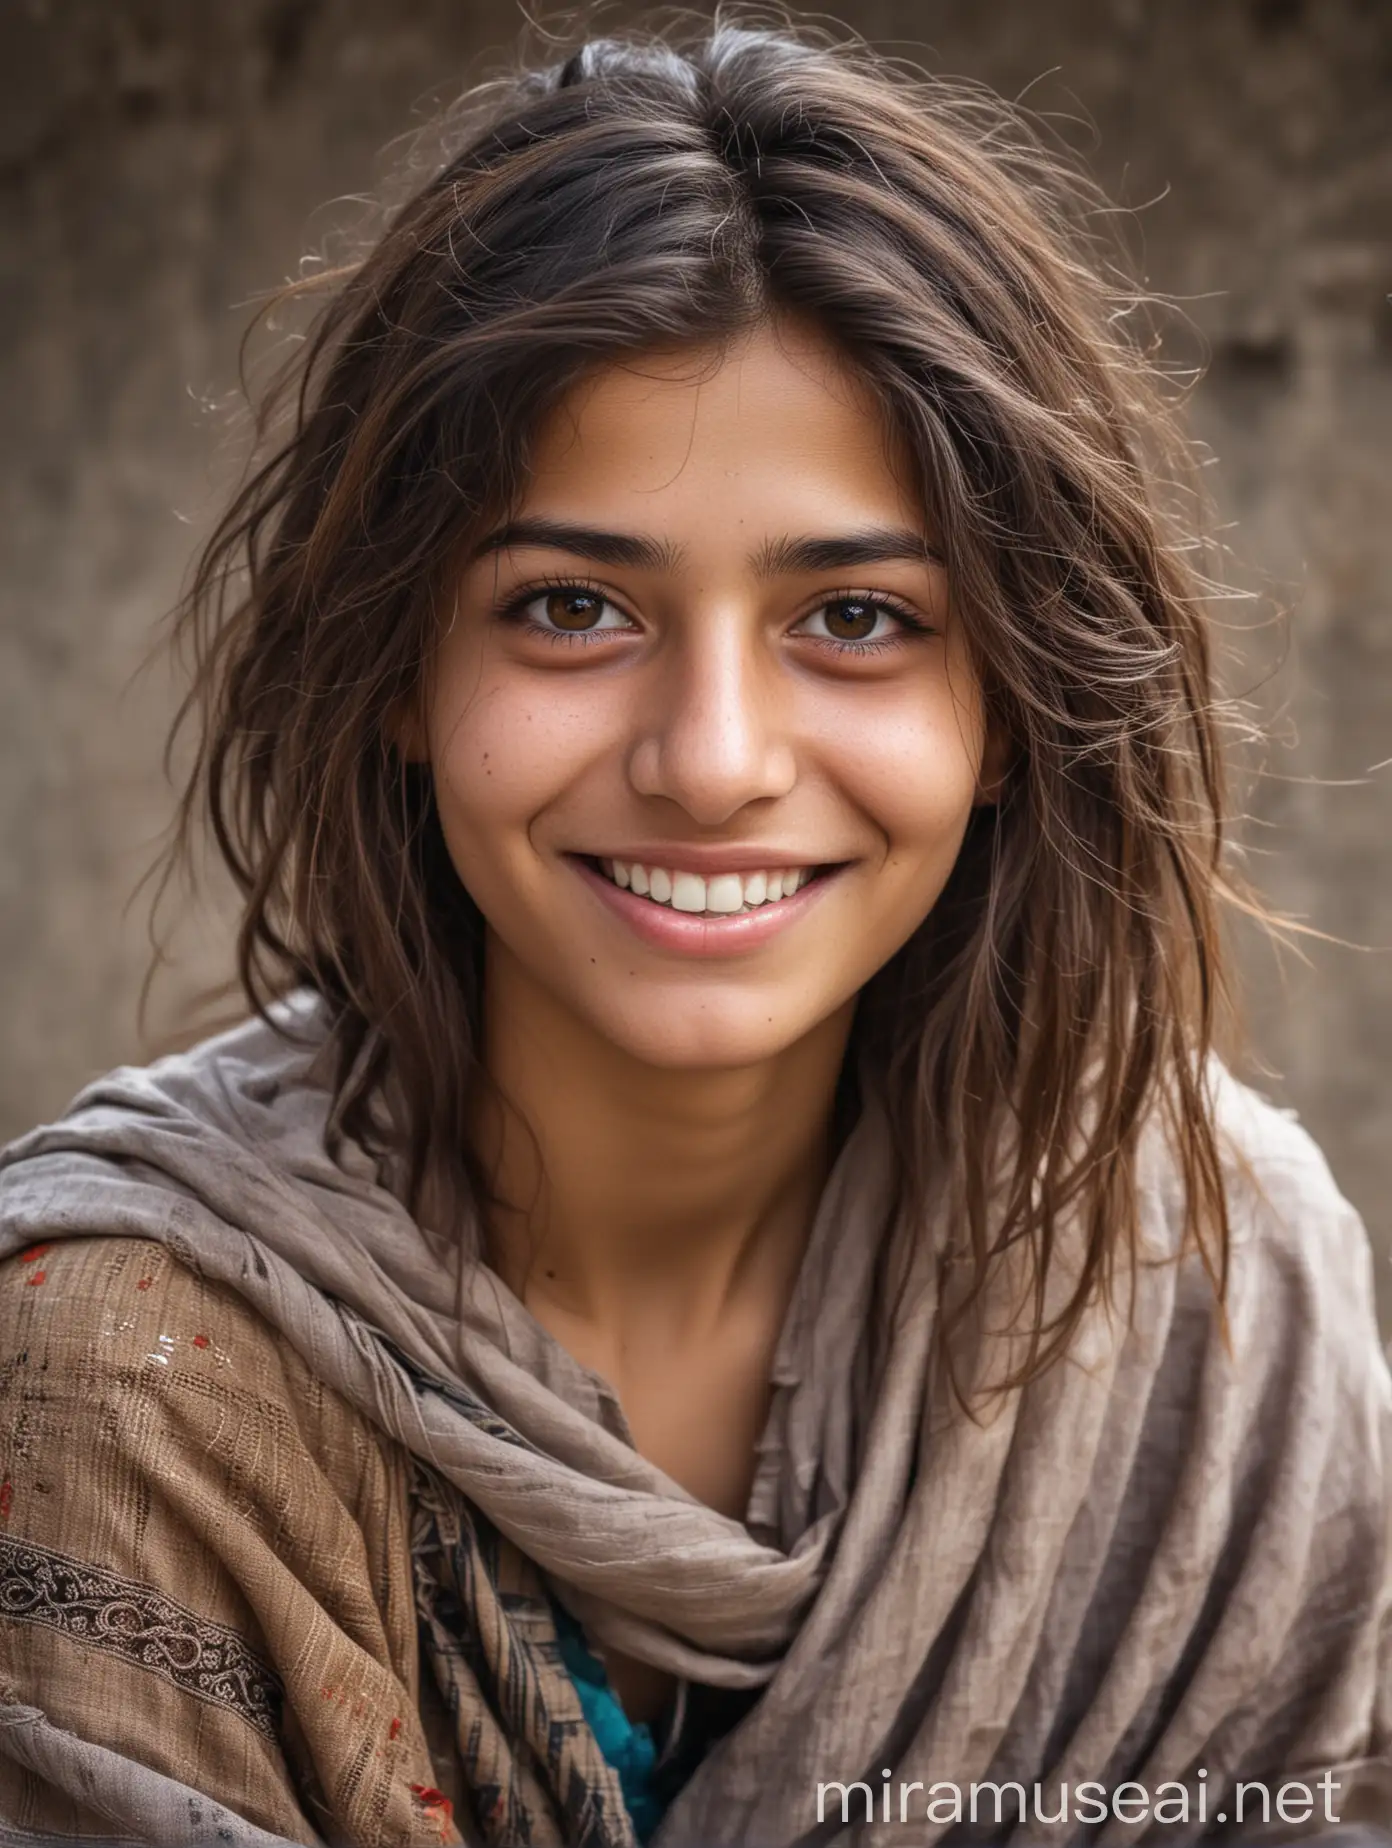 Pakistani beggar 20 year girl, beautiful and cute  face facing the camera , smile,full photo, model hair 